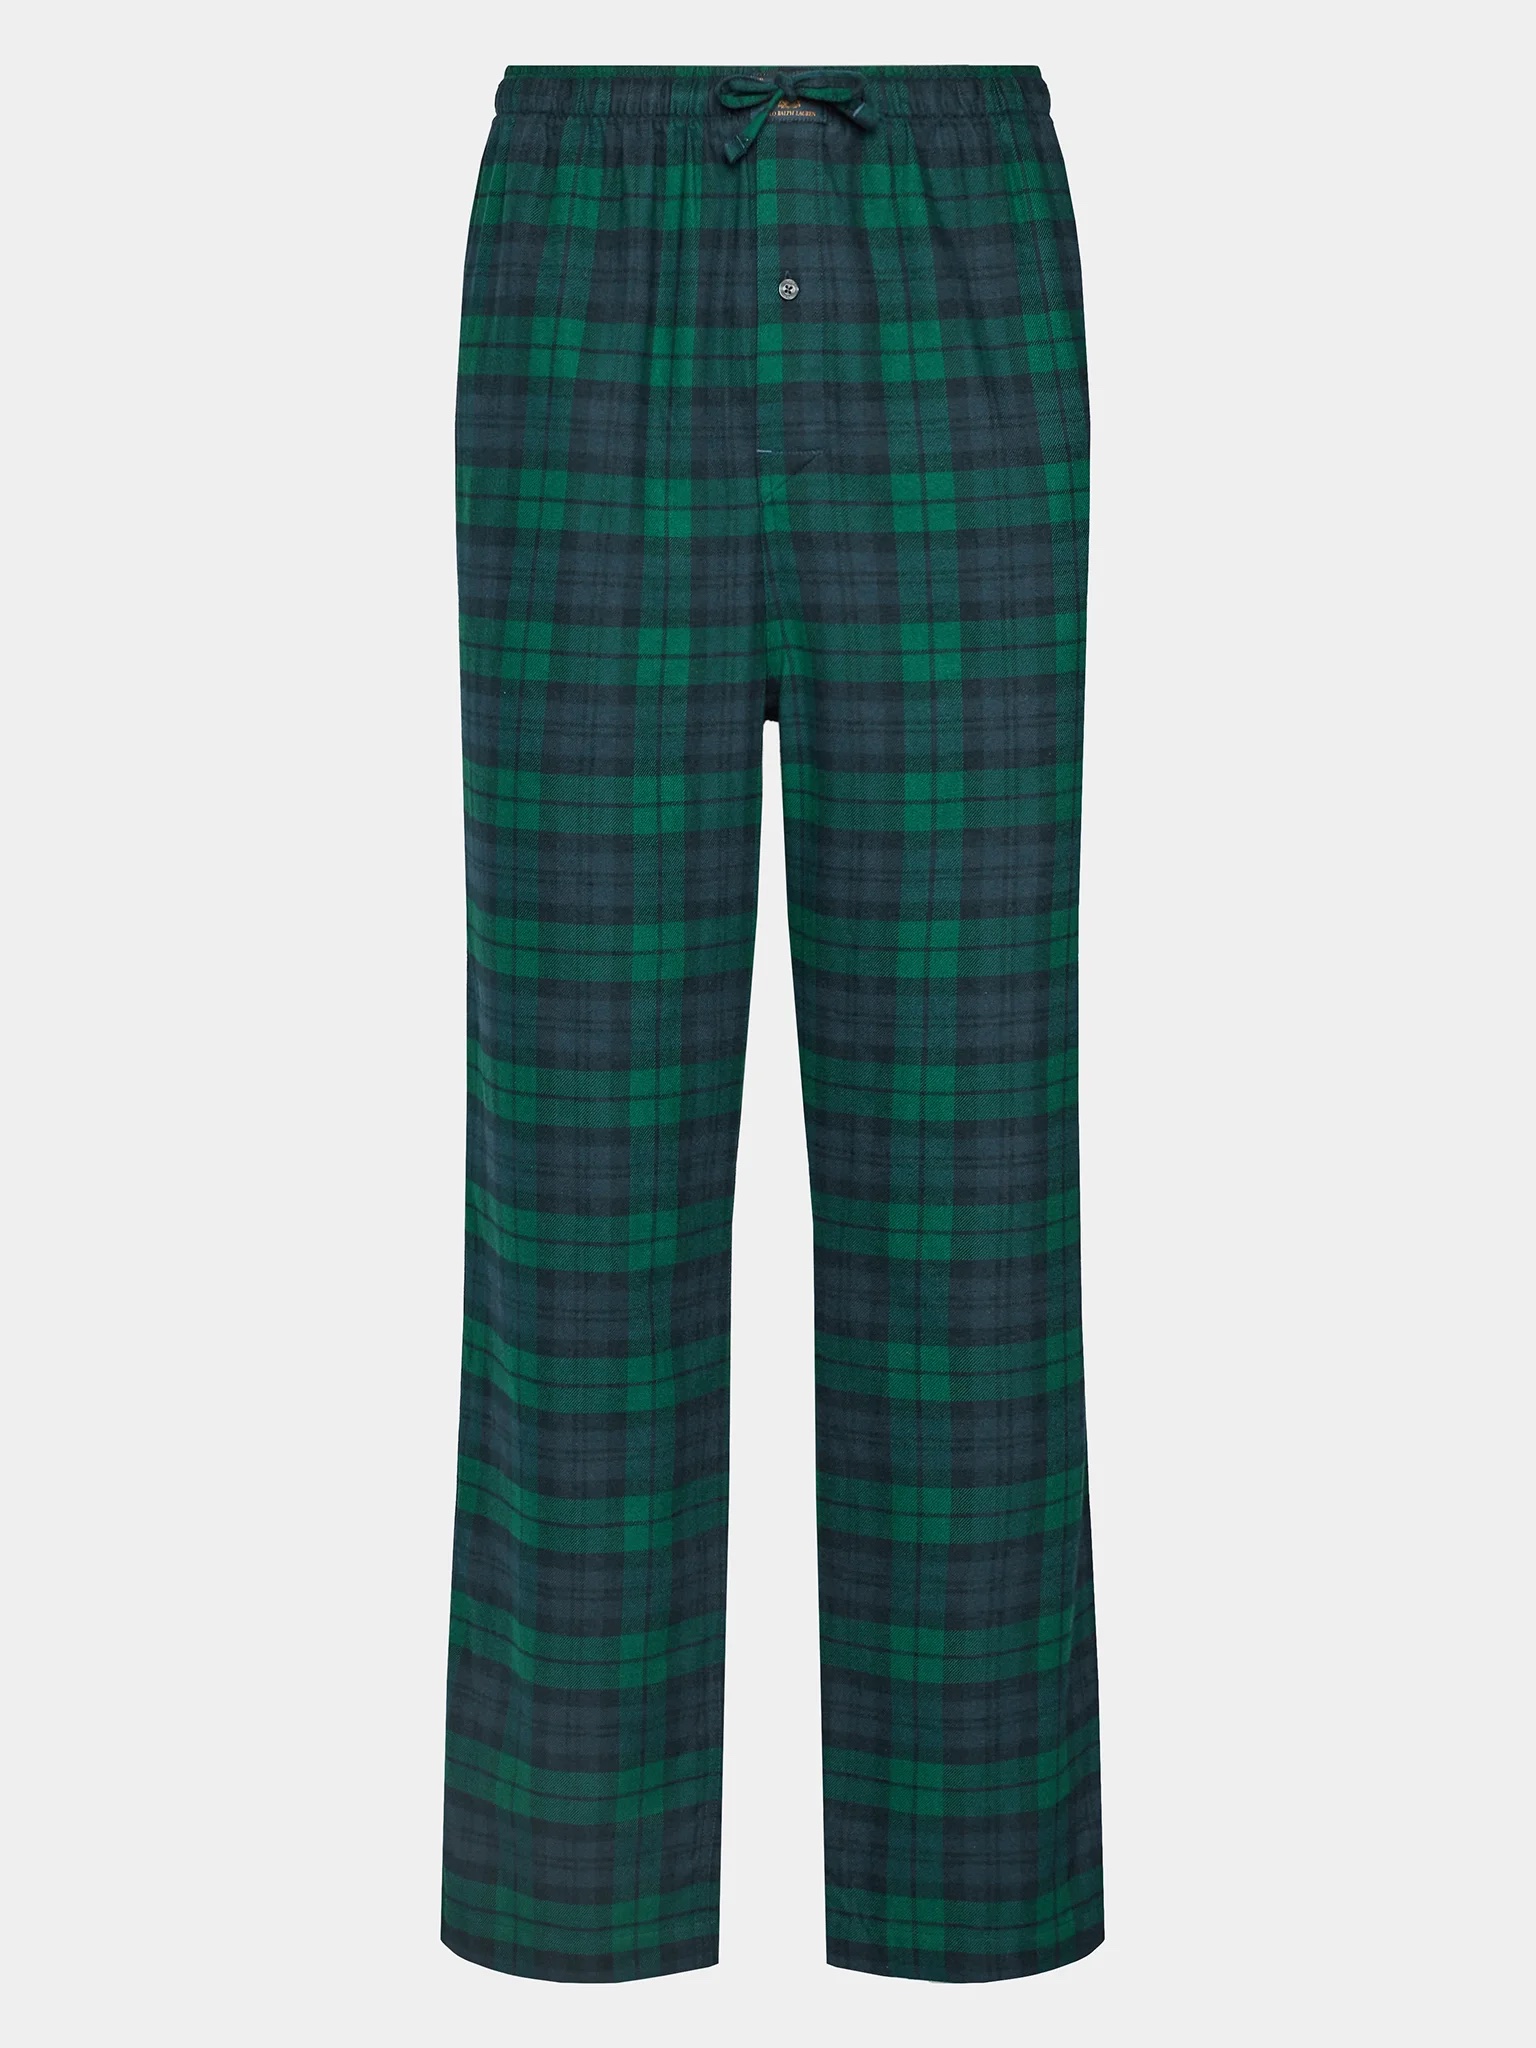 Green pajamas with tartan pattern for men - RALPH LAUREN - Pavidas